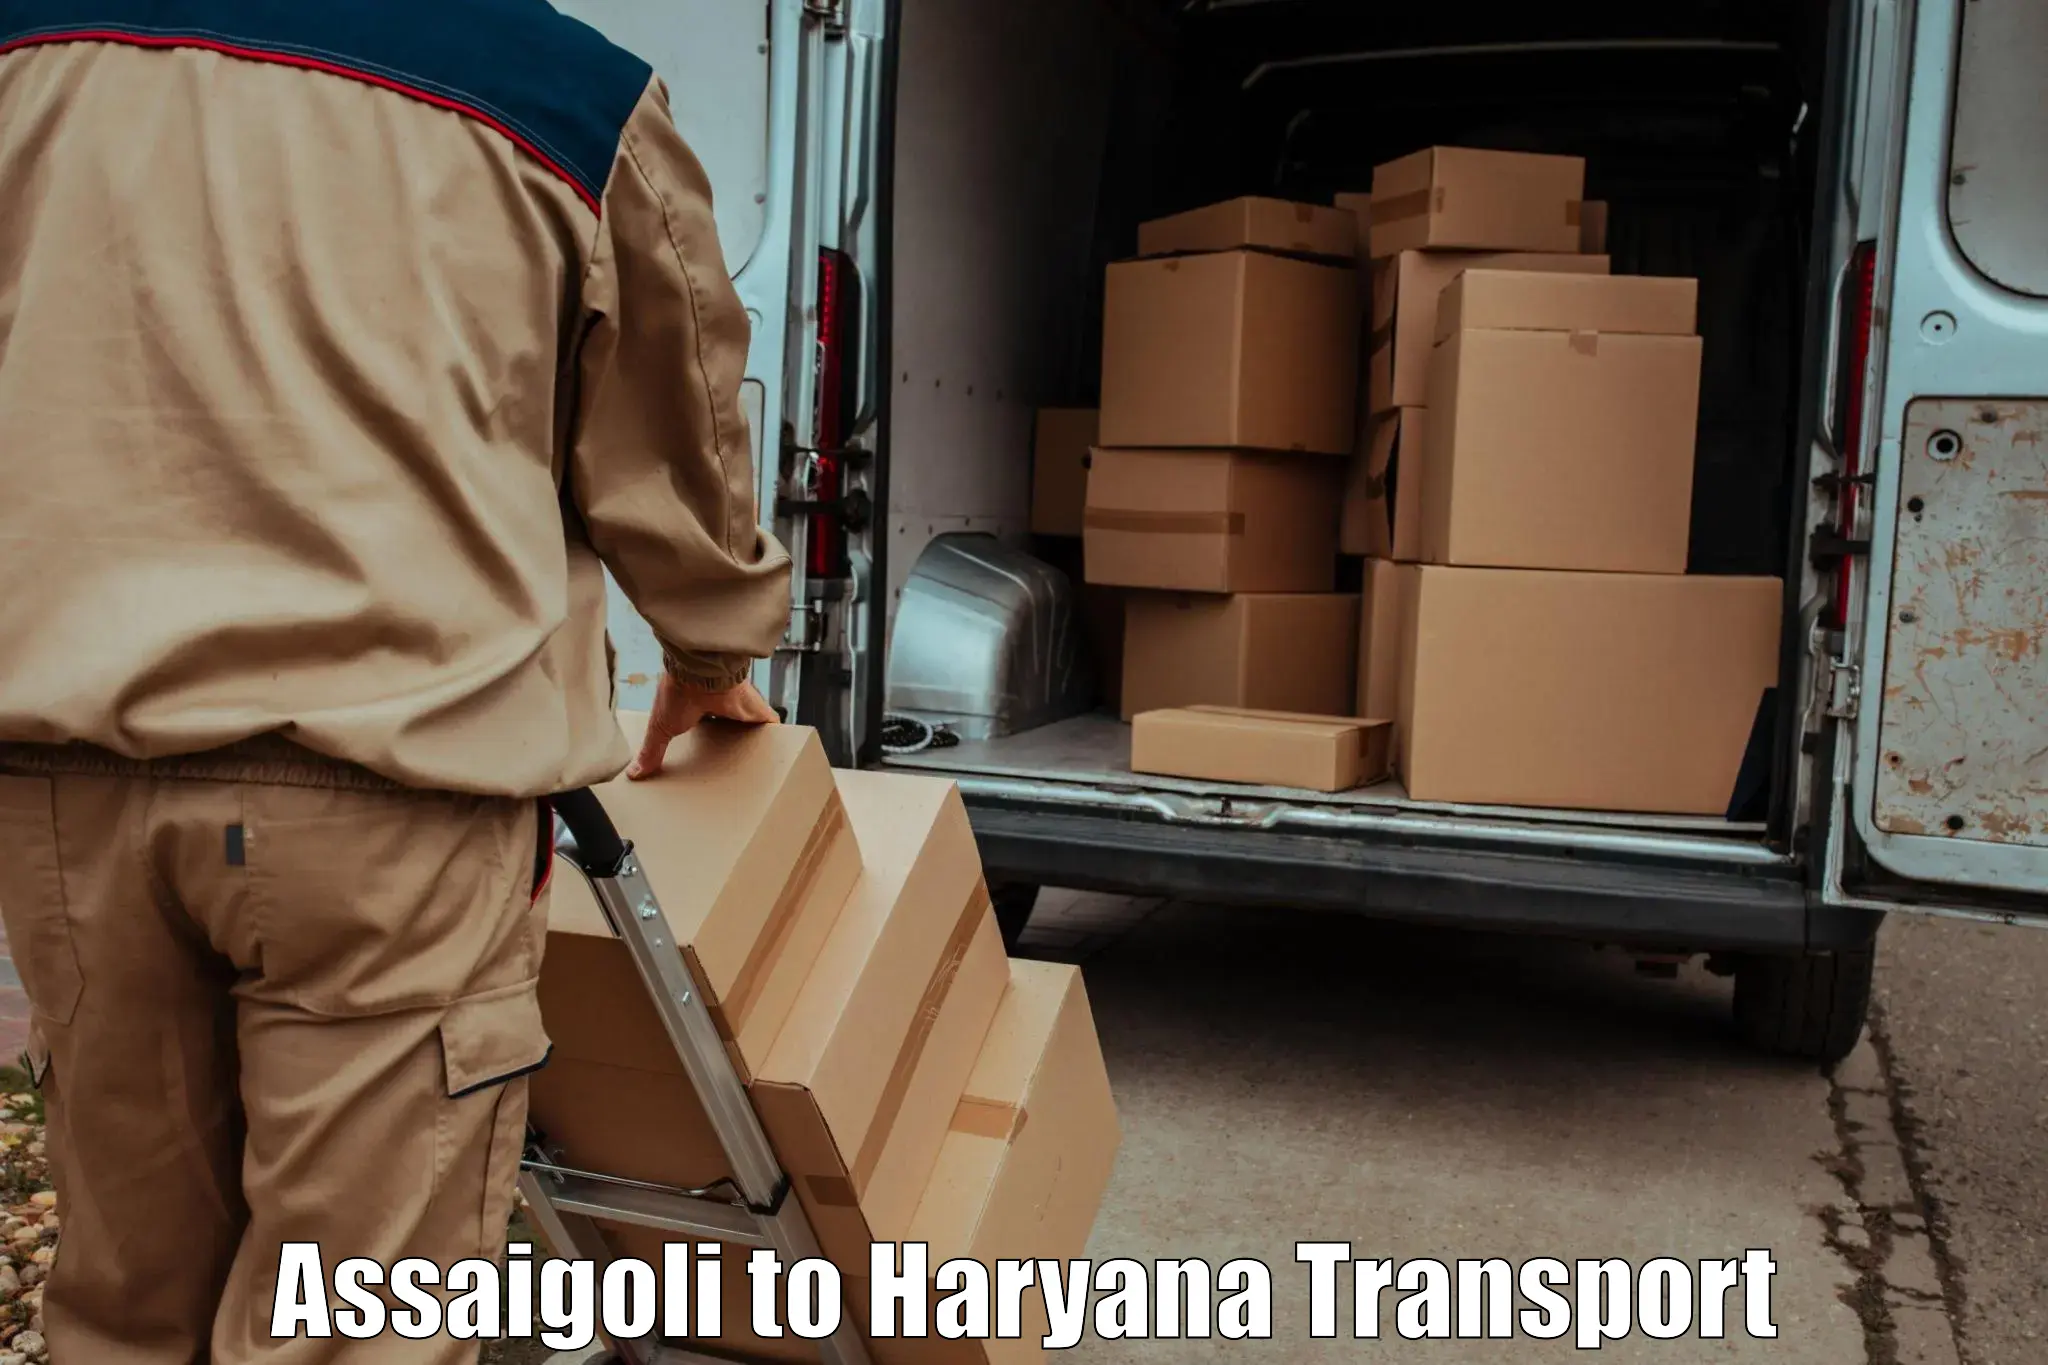 Two wheeler parcel service in Assaigoli to Panchkula